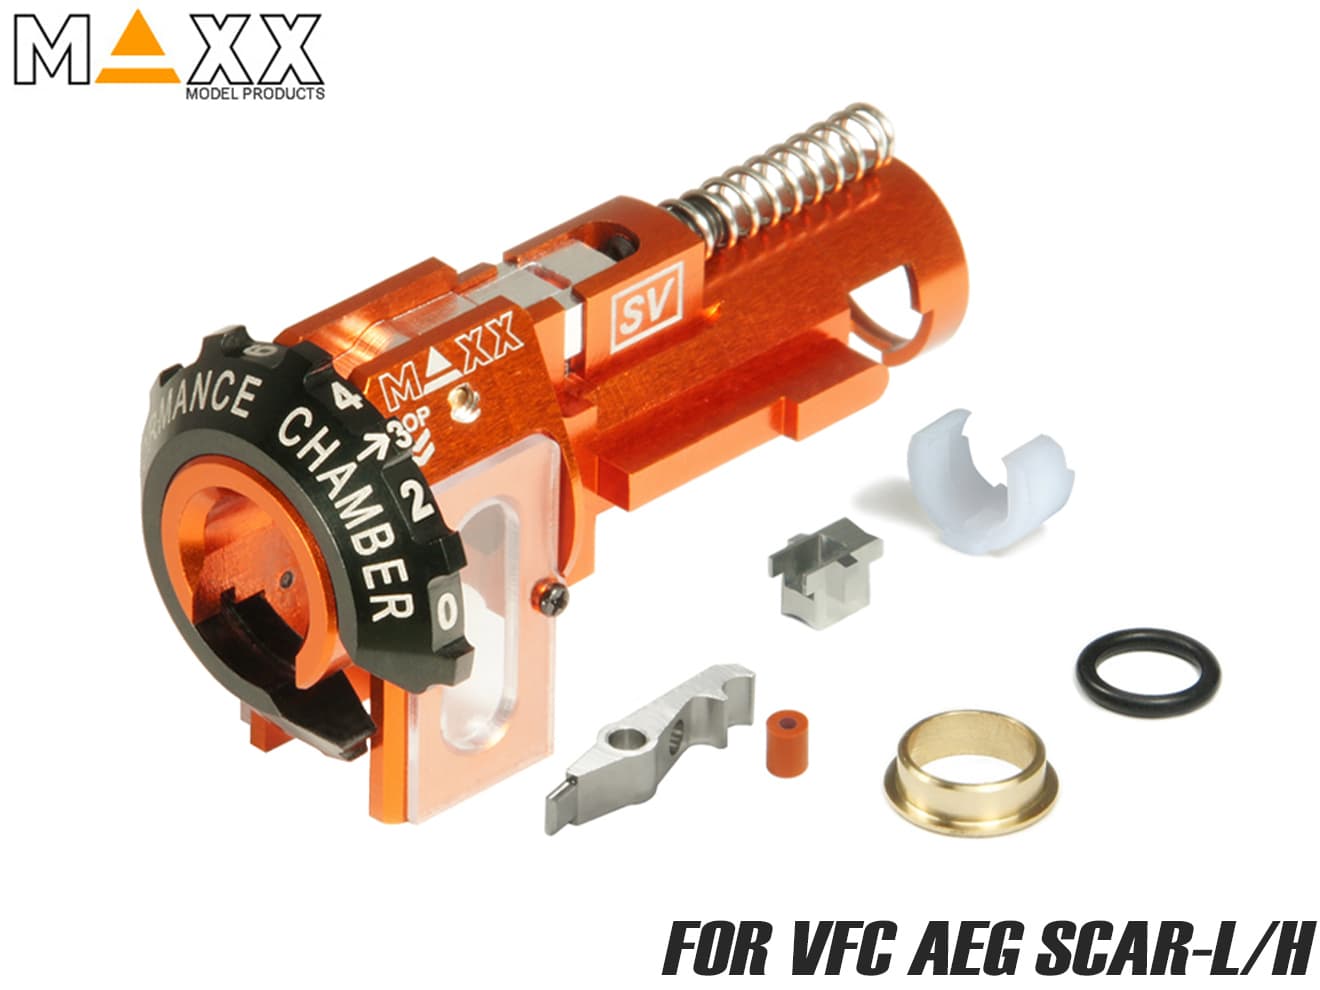 MAXX アルミCNC ホップアップチャンバー SV for AEG VFC SCAR-L/H VFC 電動ガン SCAR-L SCAR-H対応 LEDモジュール装着可能 A6061製